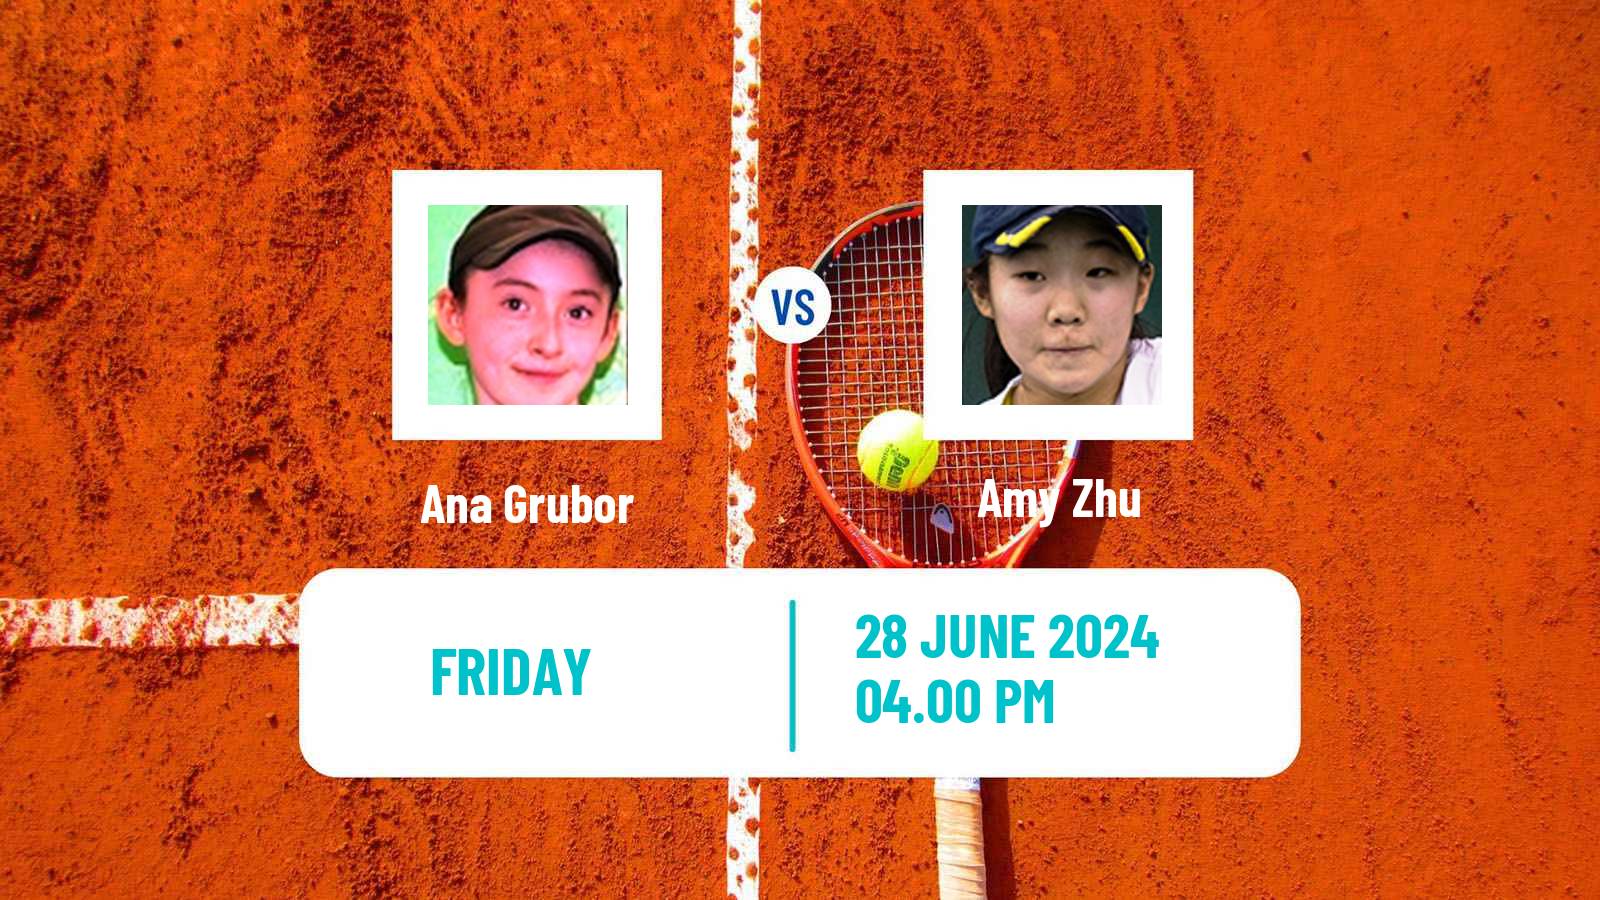 Tennis ITF W15 Los Angeles Ca Women Ana Grubor - Amy Zhu